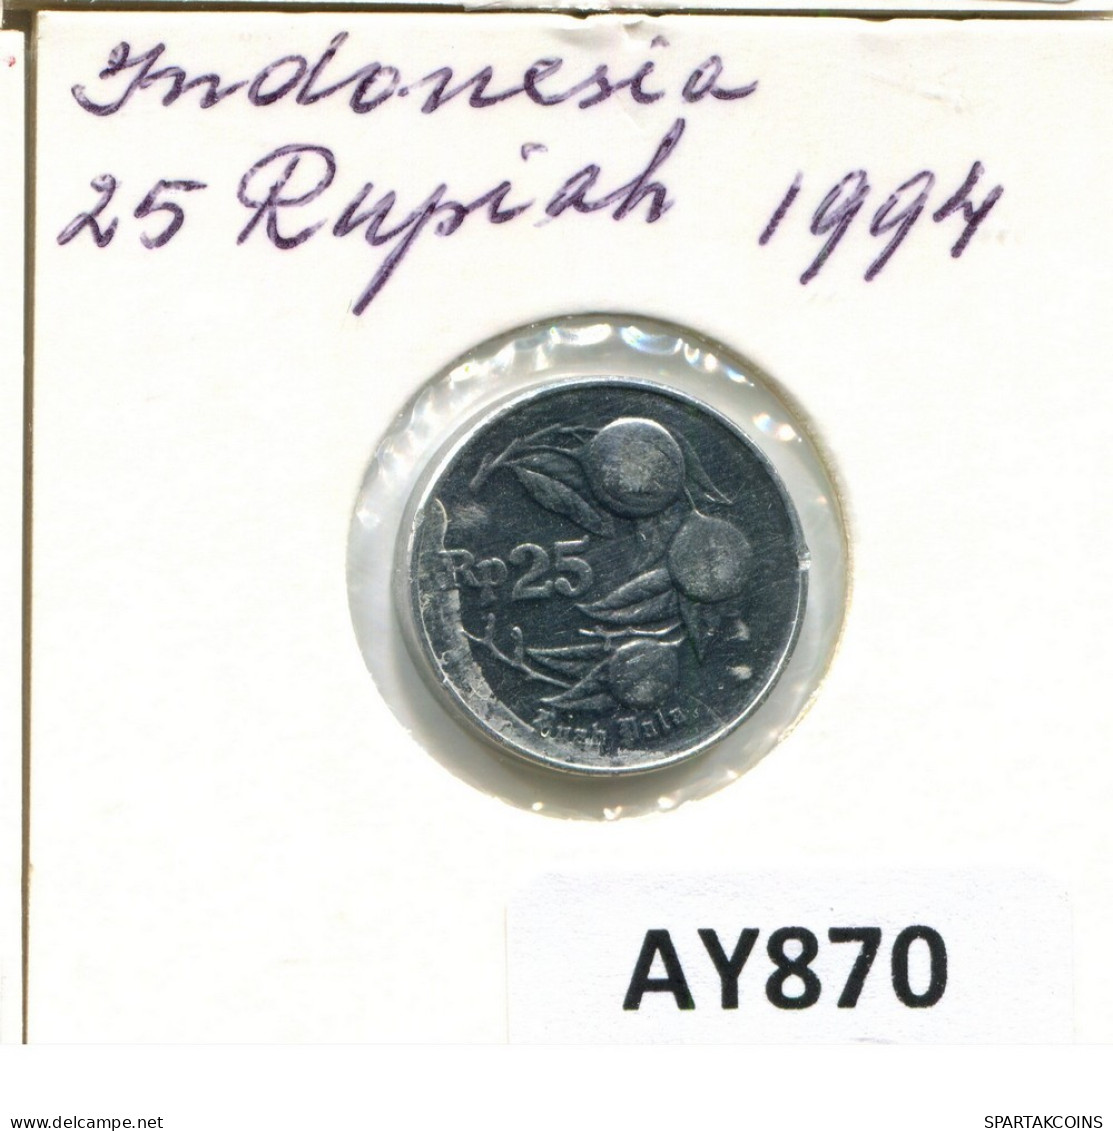 25 RUPIAH 1994 INDONESIA Coin #AY870.U.A - Indonesien